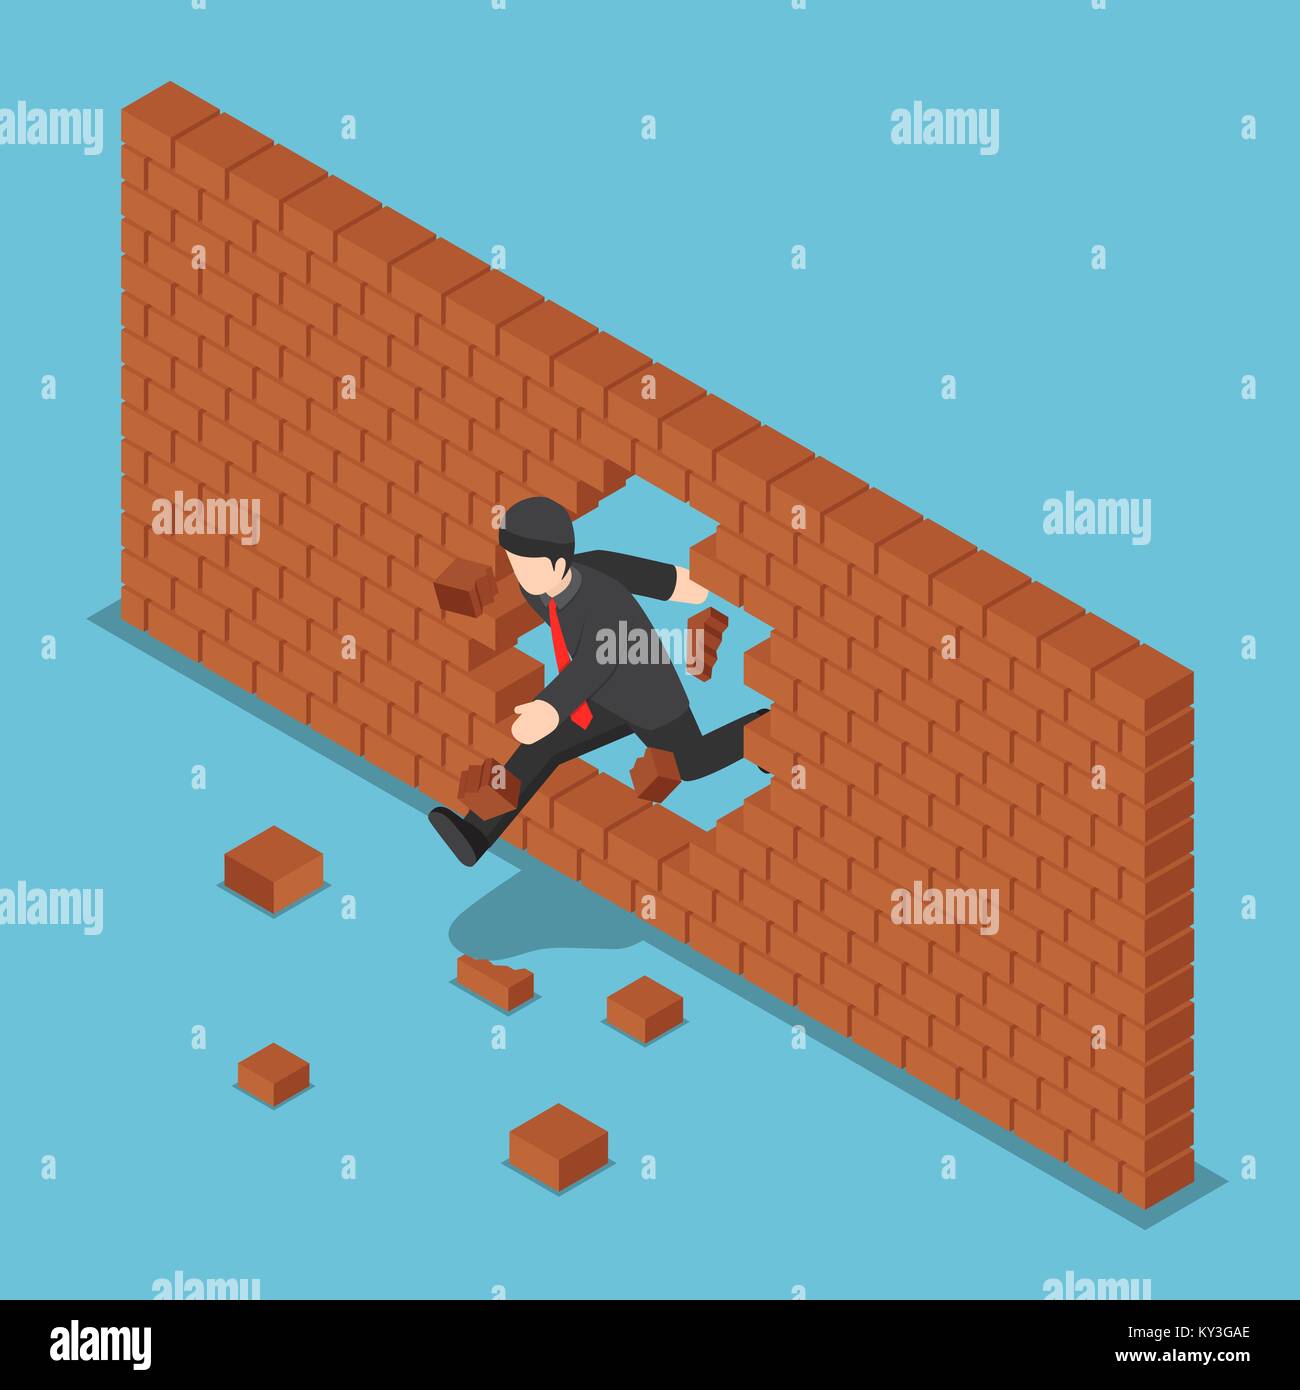 Flat 3d isometric businessman breaking through brick wall. Leadership concept. Stock Vector